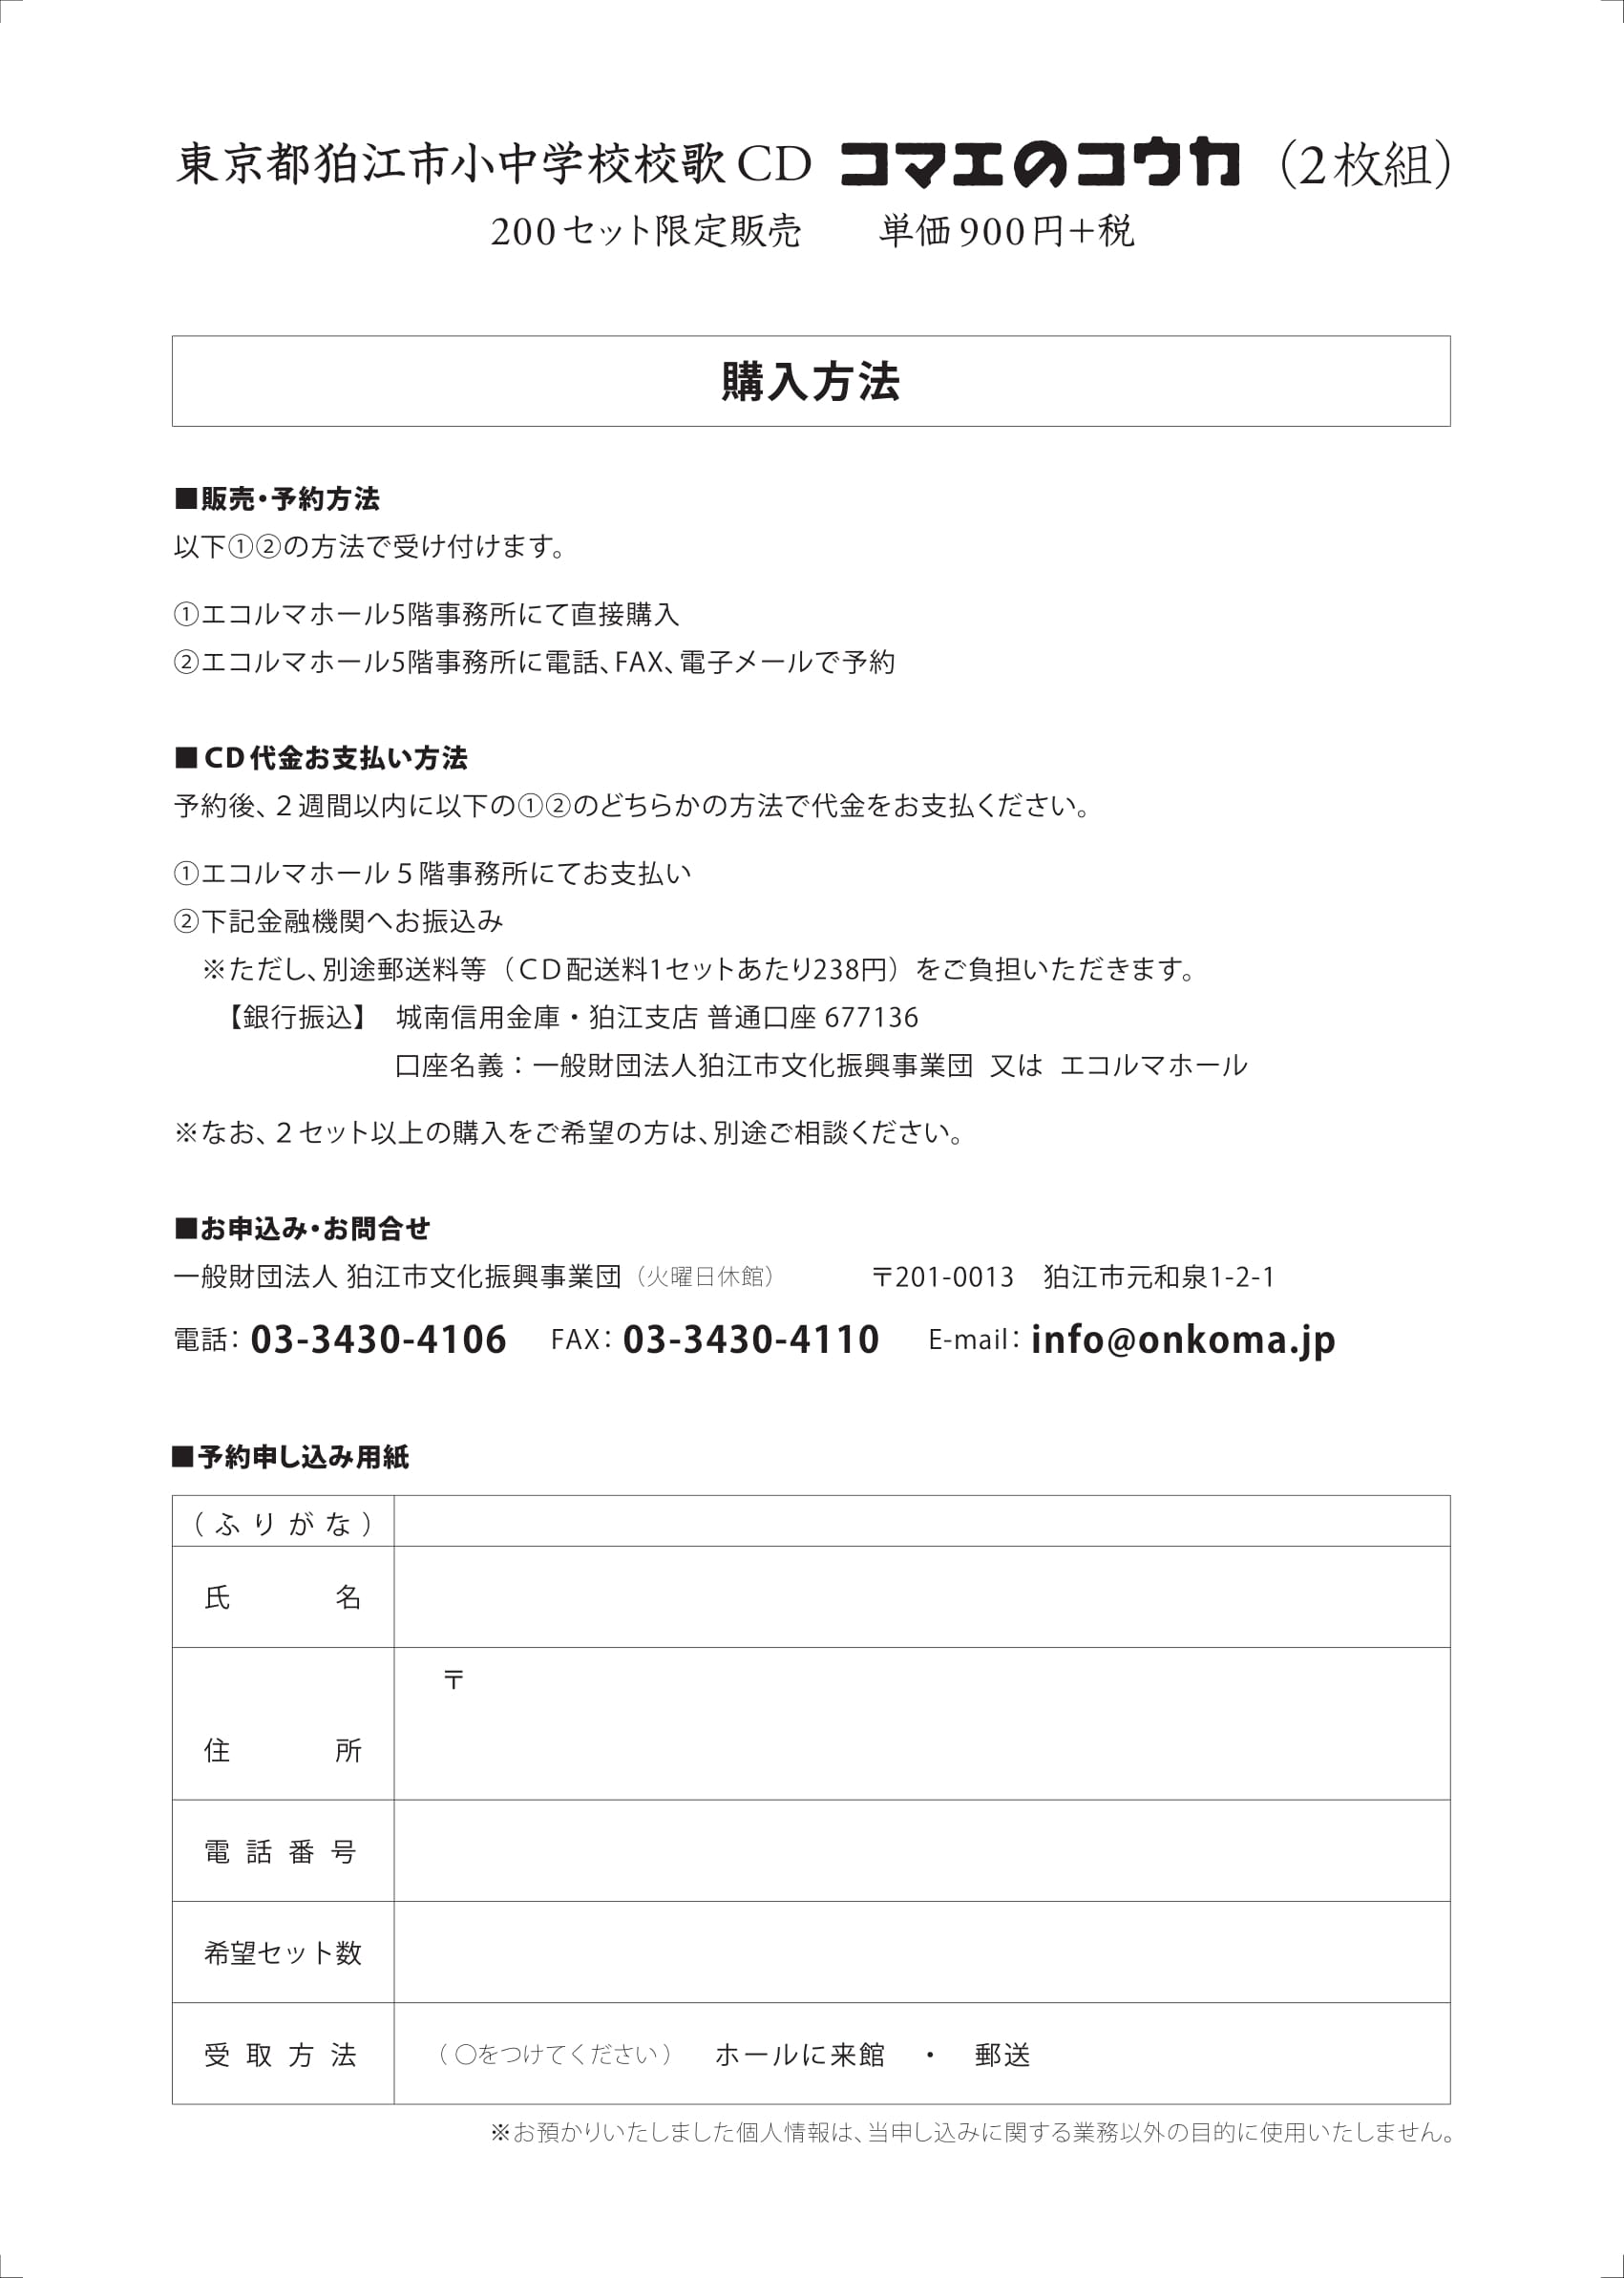 http://onkoma.jp/information/page-2-1.jpg